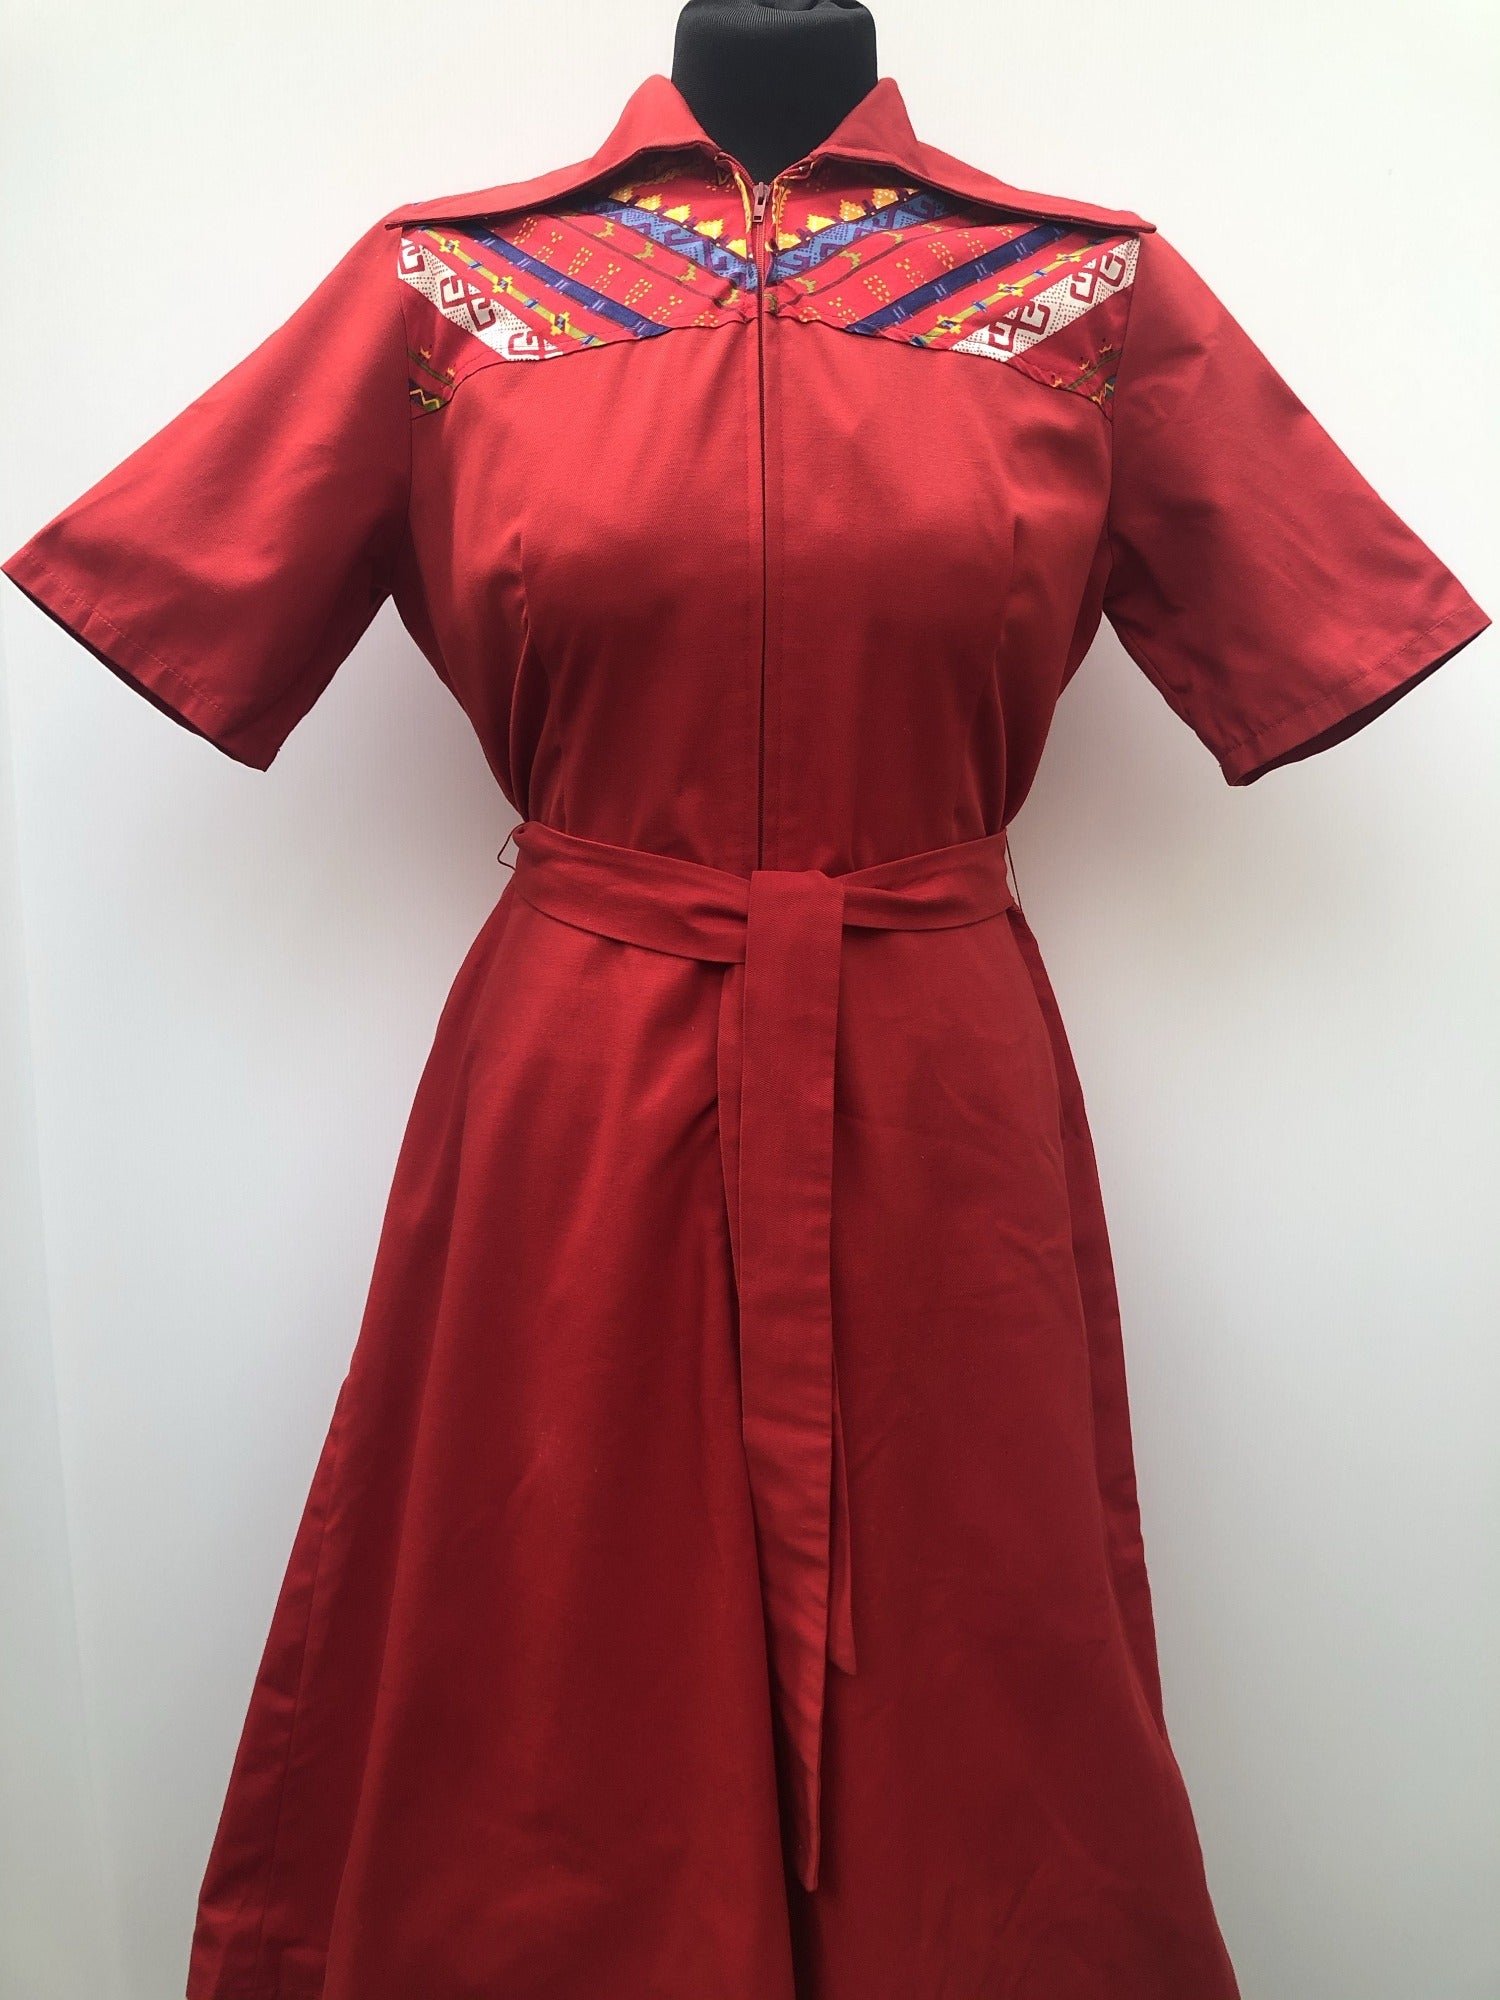 zip front  womens  vintage  Urban Village Vintage  Spinney  shot sleeve  red  culottes  collar  aztec print  aztec  70s  1970s  12